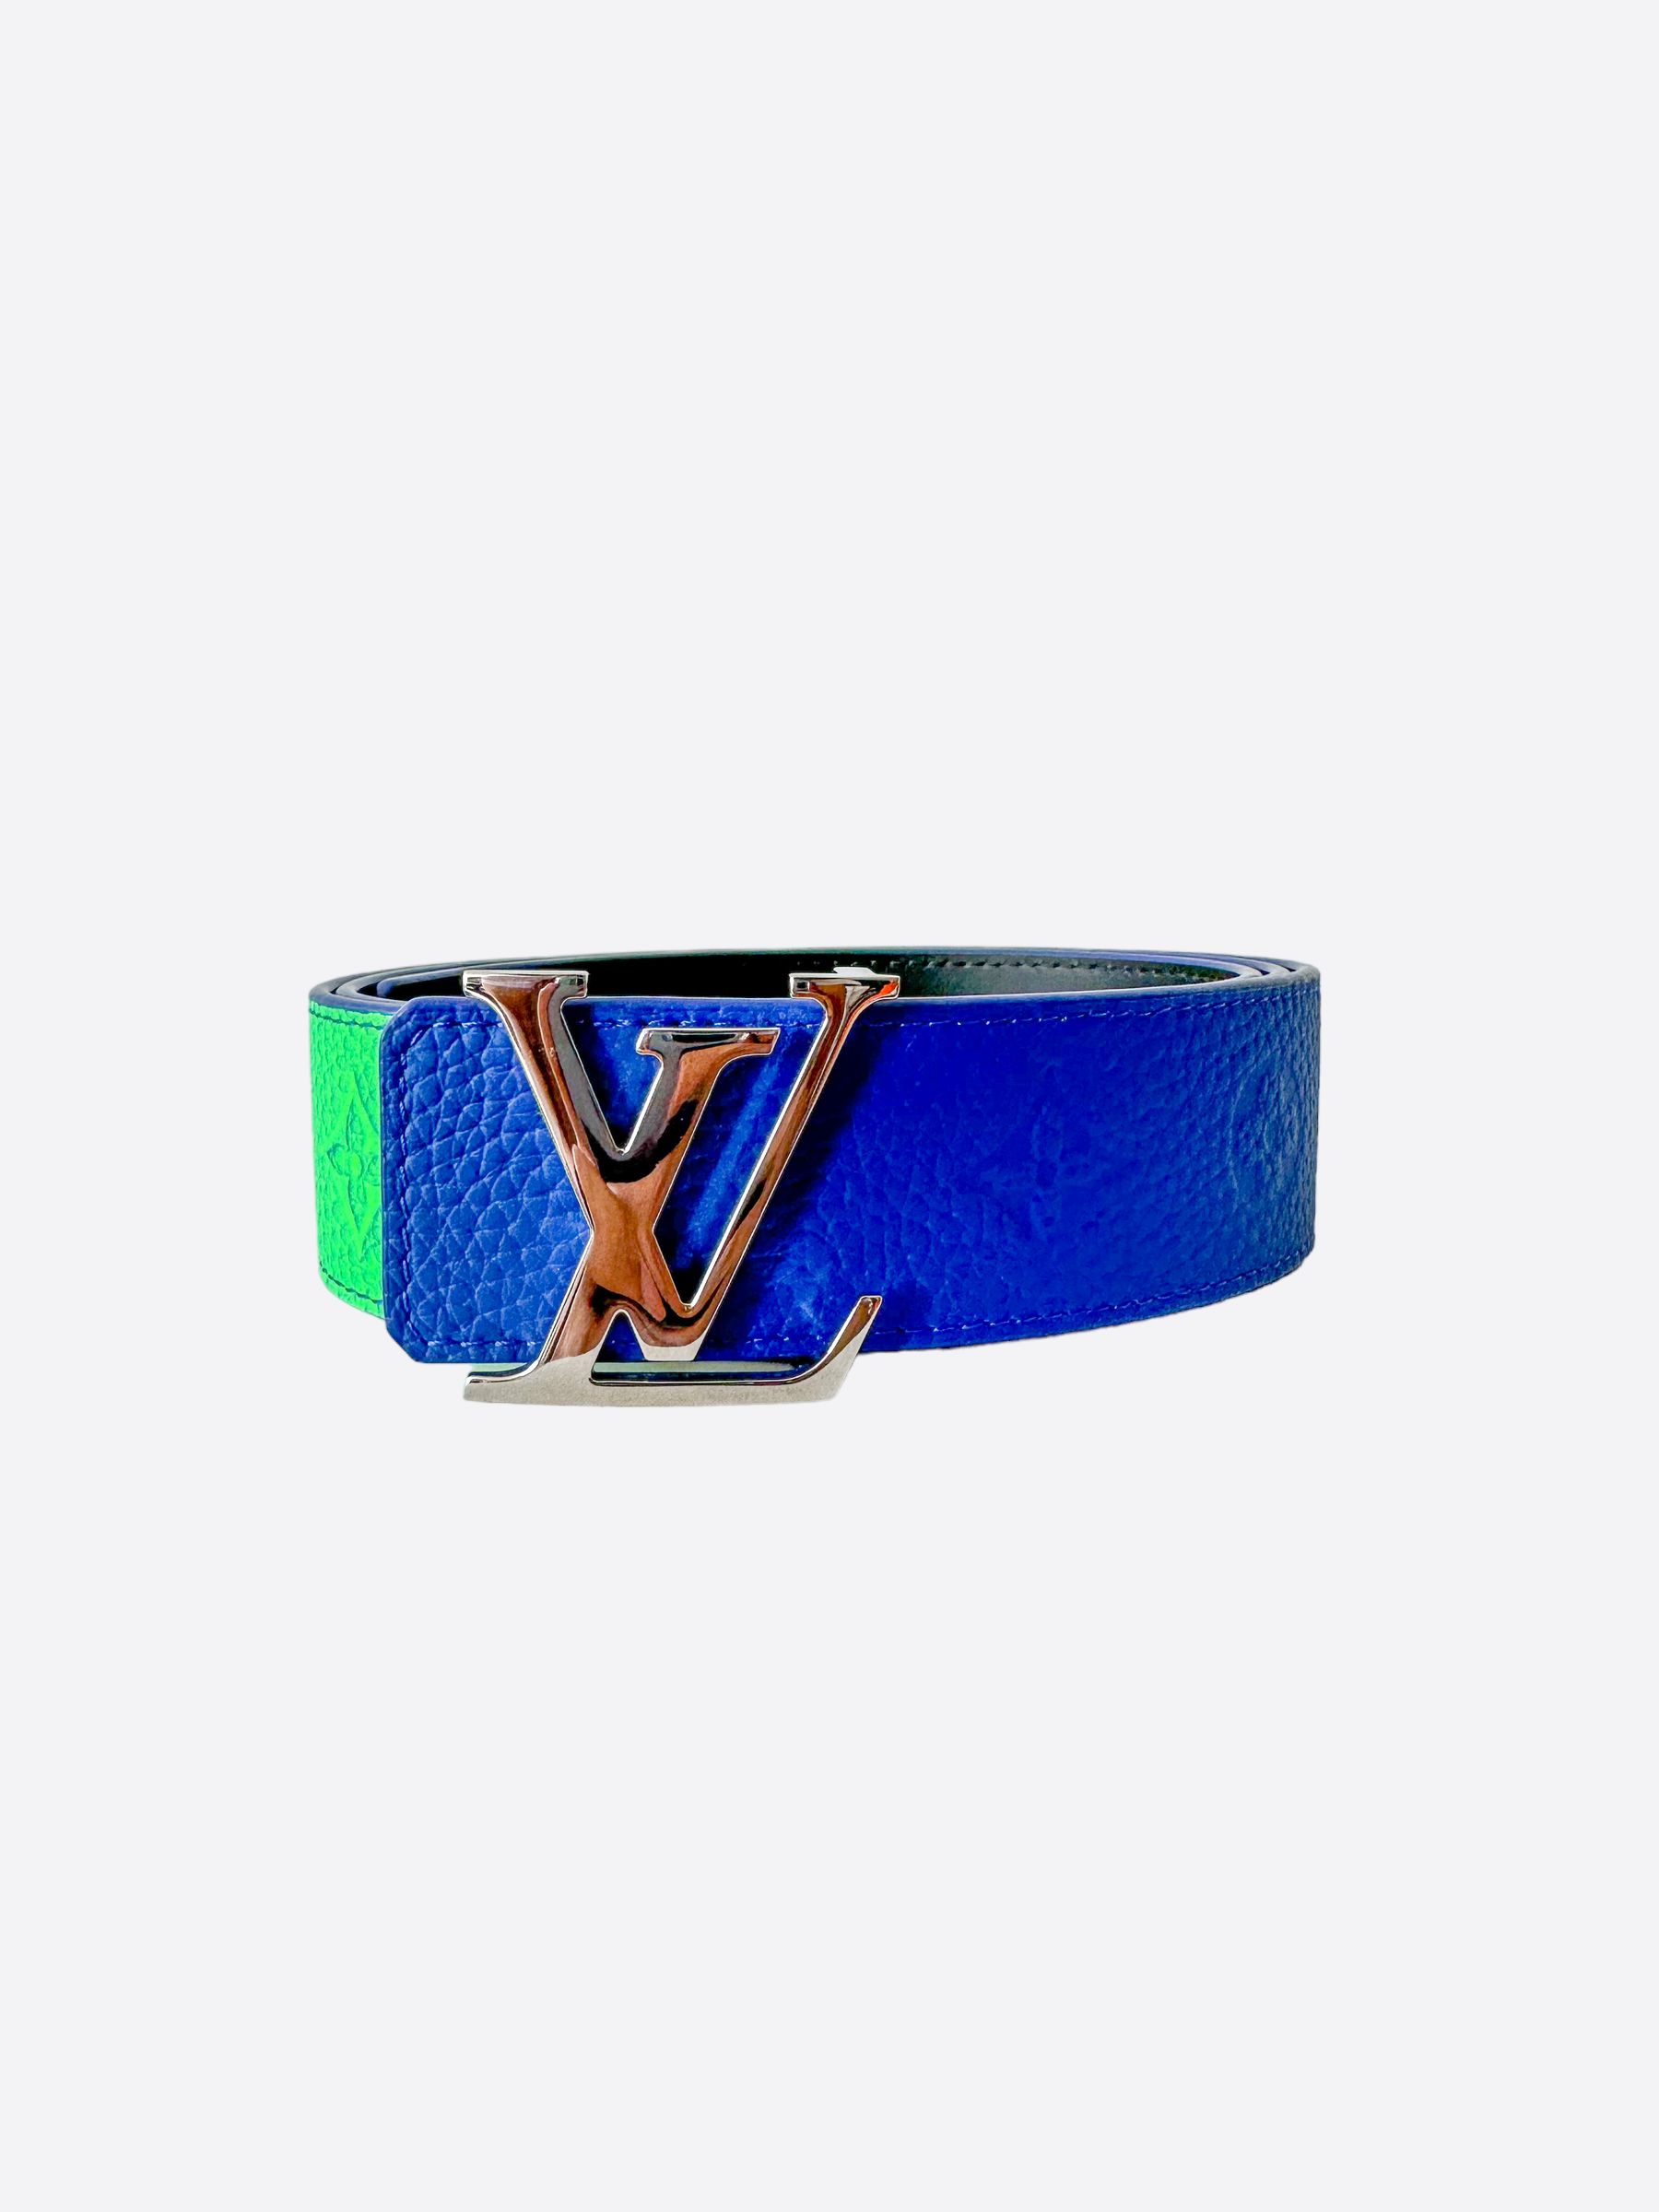 Pre-owned Louis Vuitton Blue & Green Illusion Monogram Belt